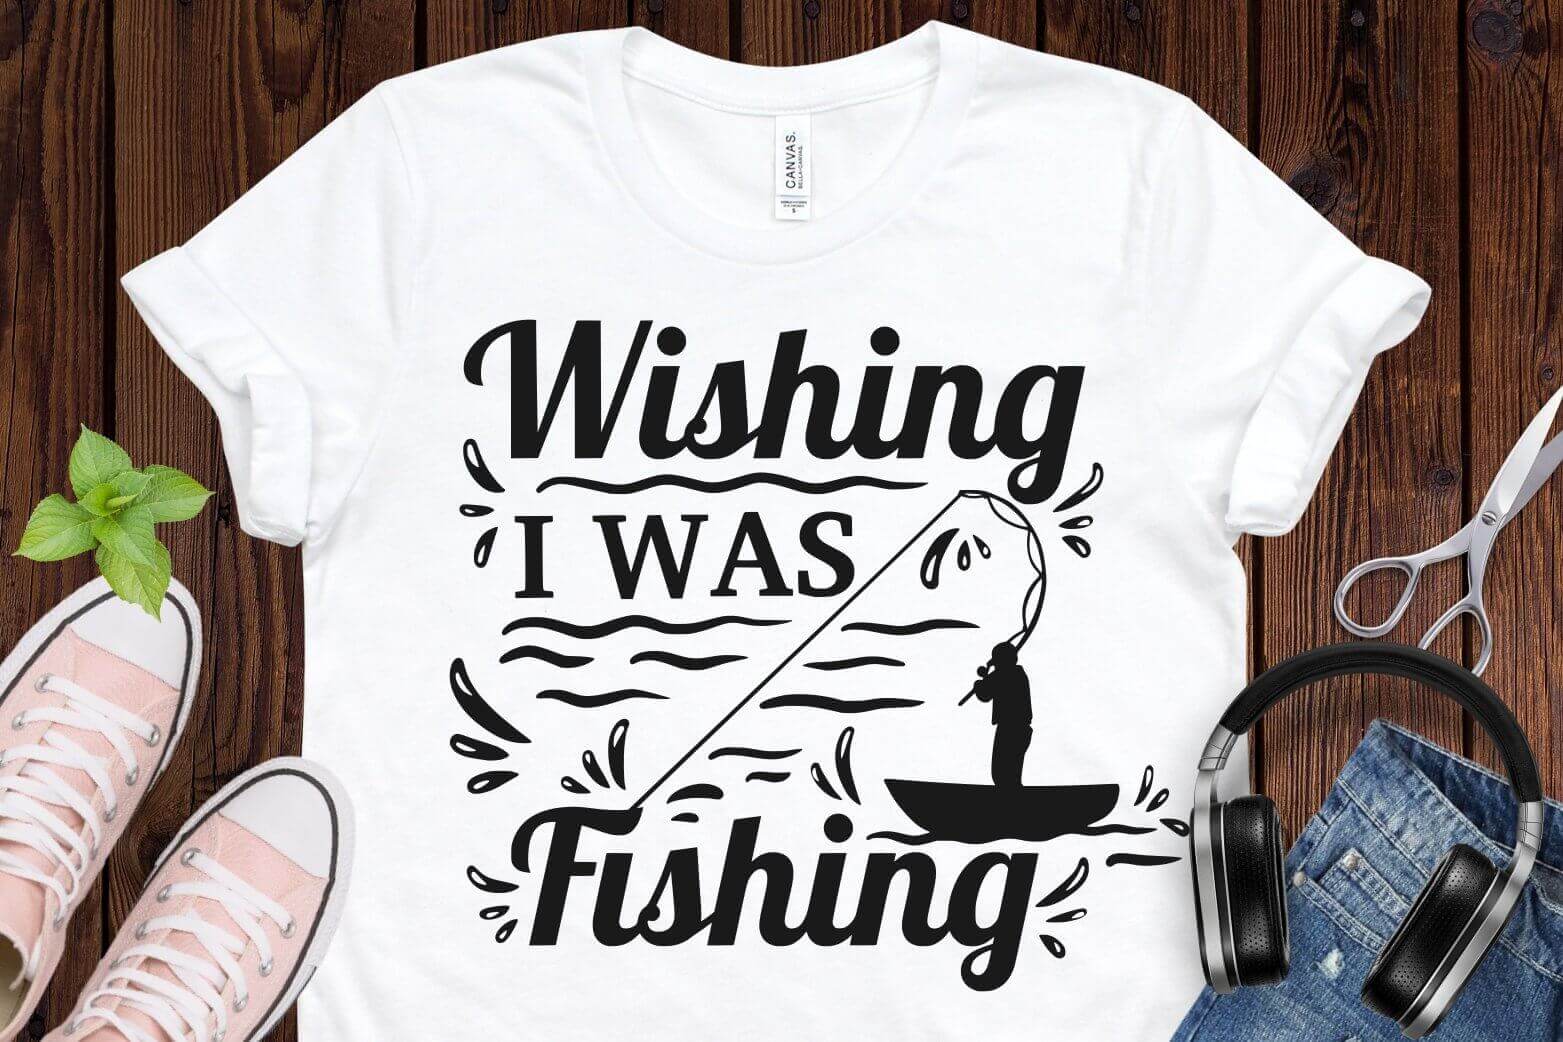 Wishing I was Fishing.